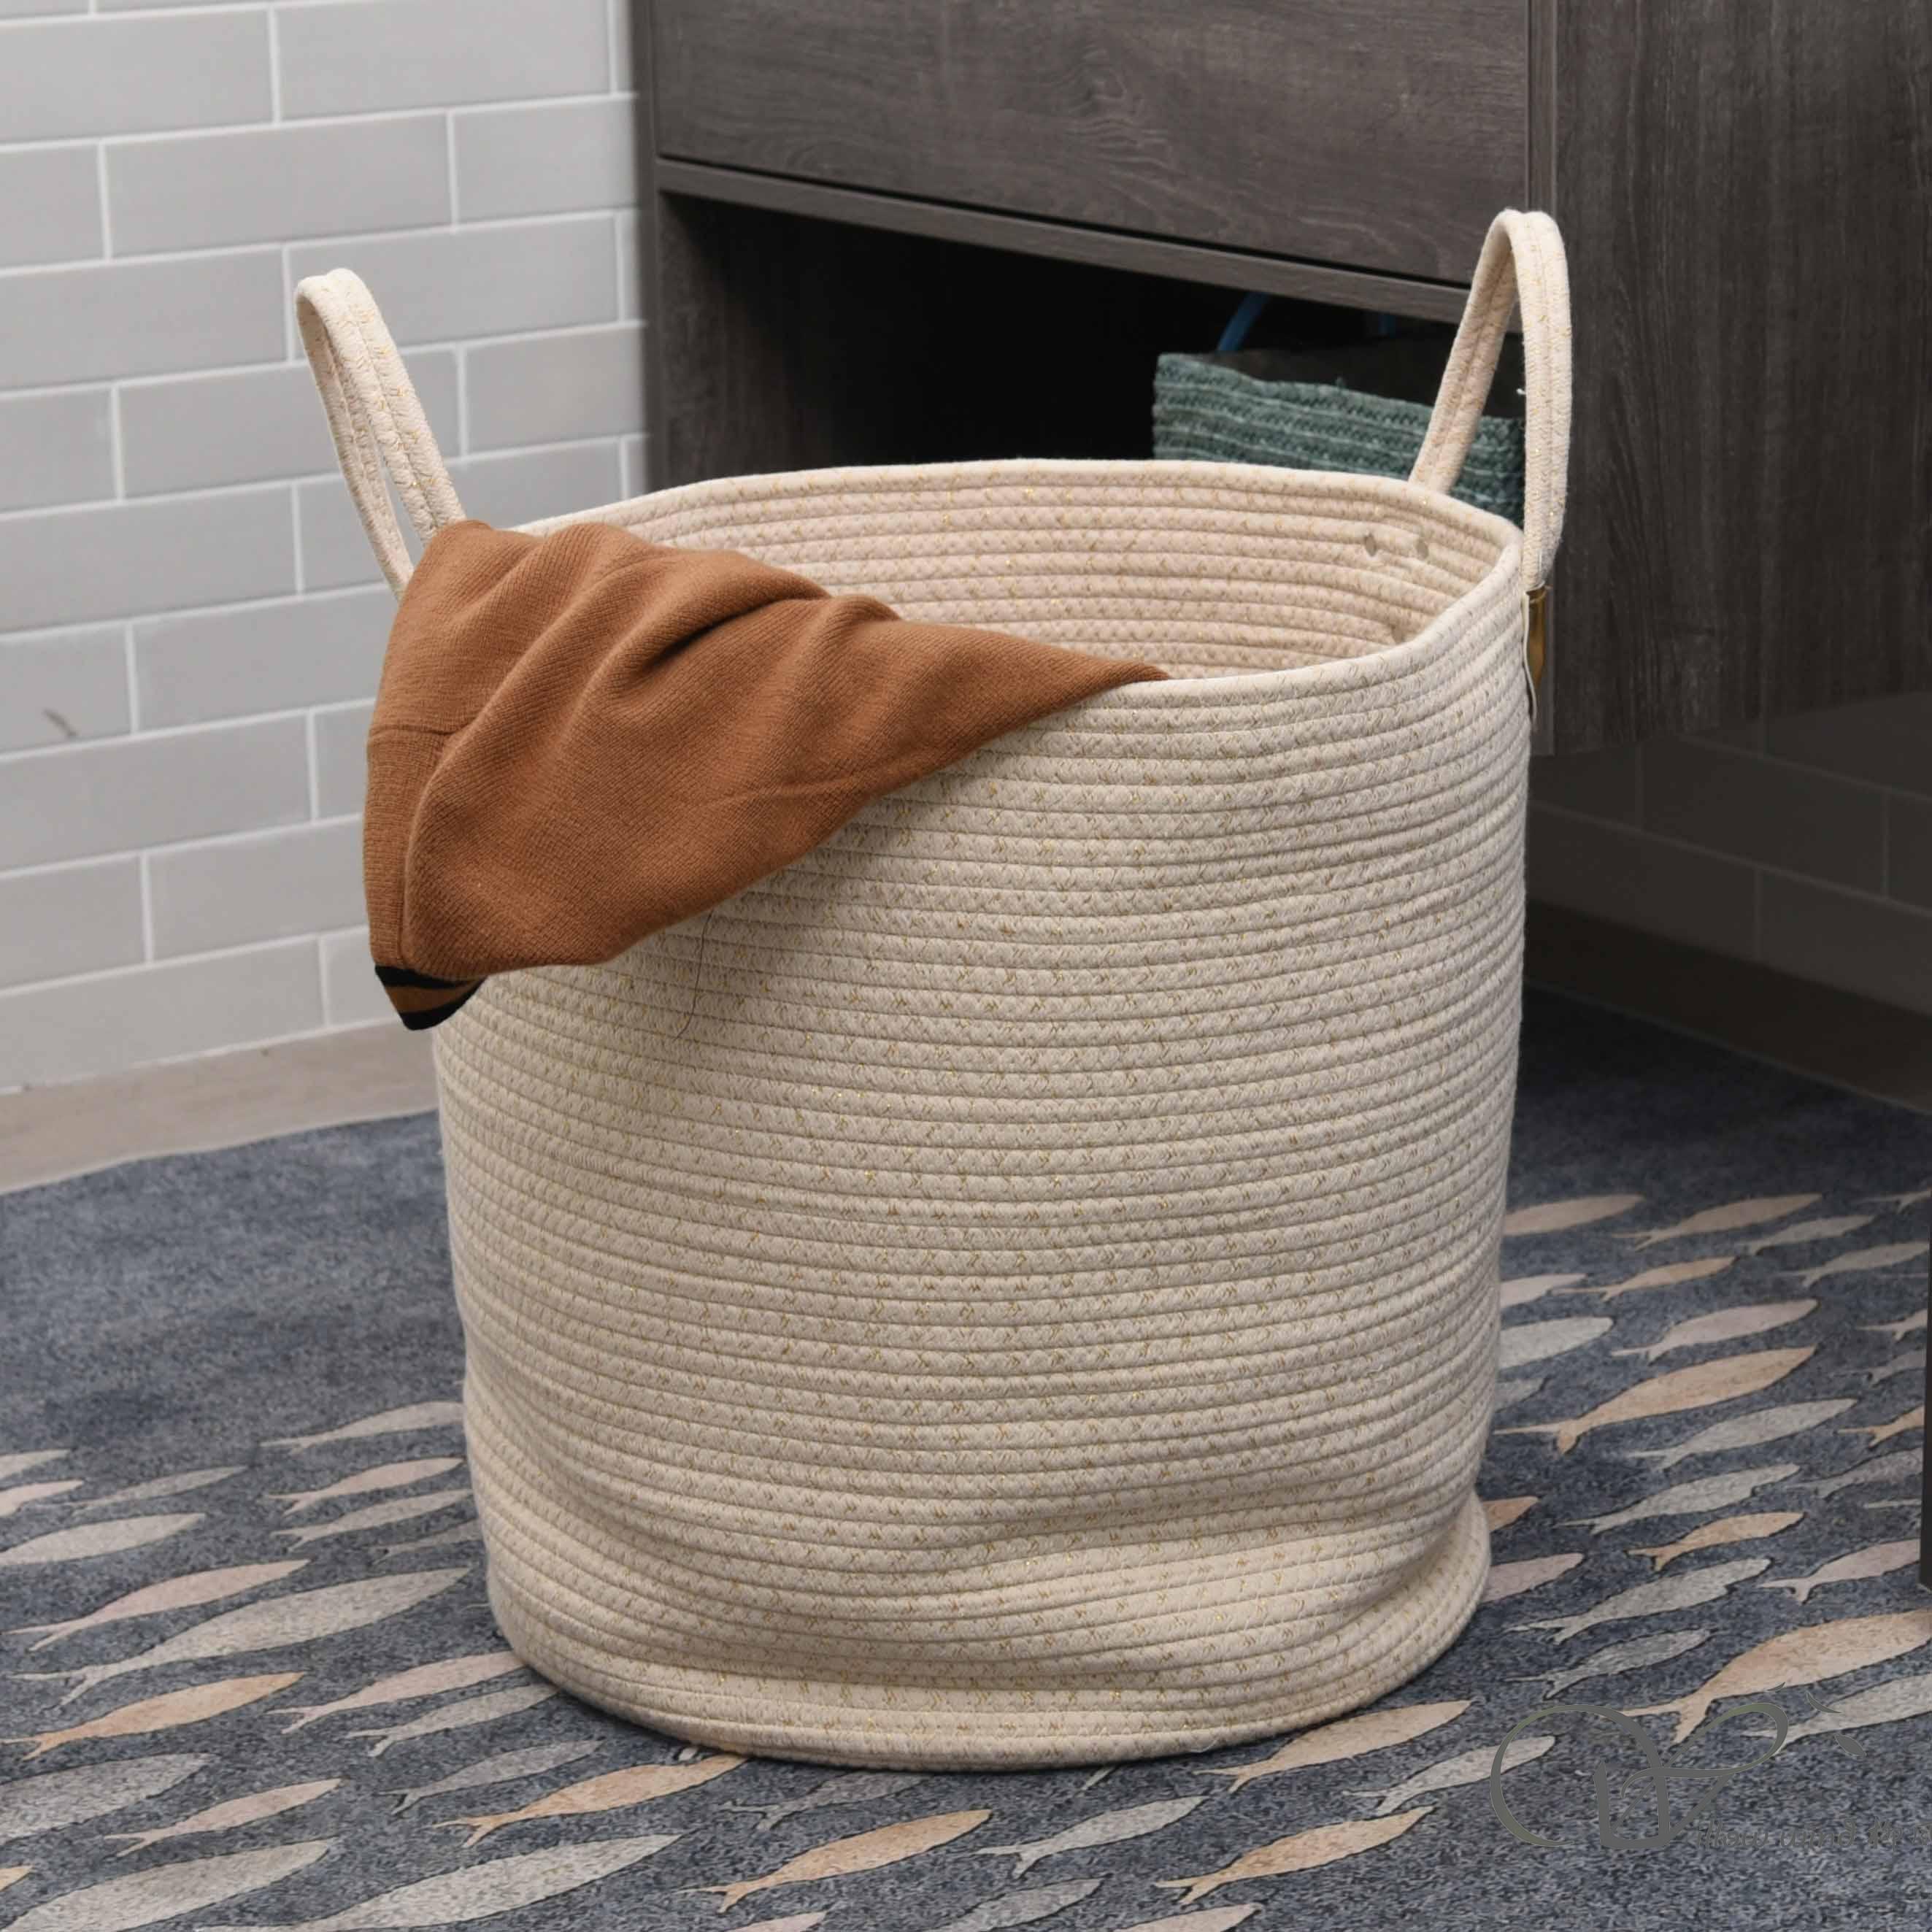 Off-white Natural cotton rope storage basket laundry basket hamper